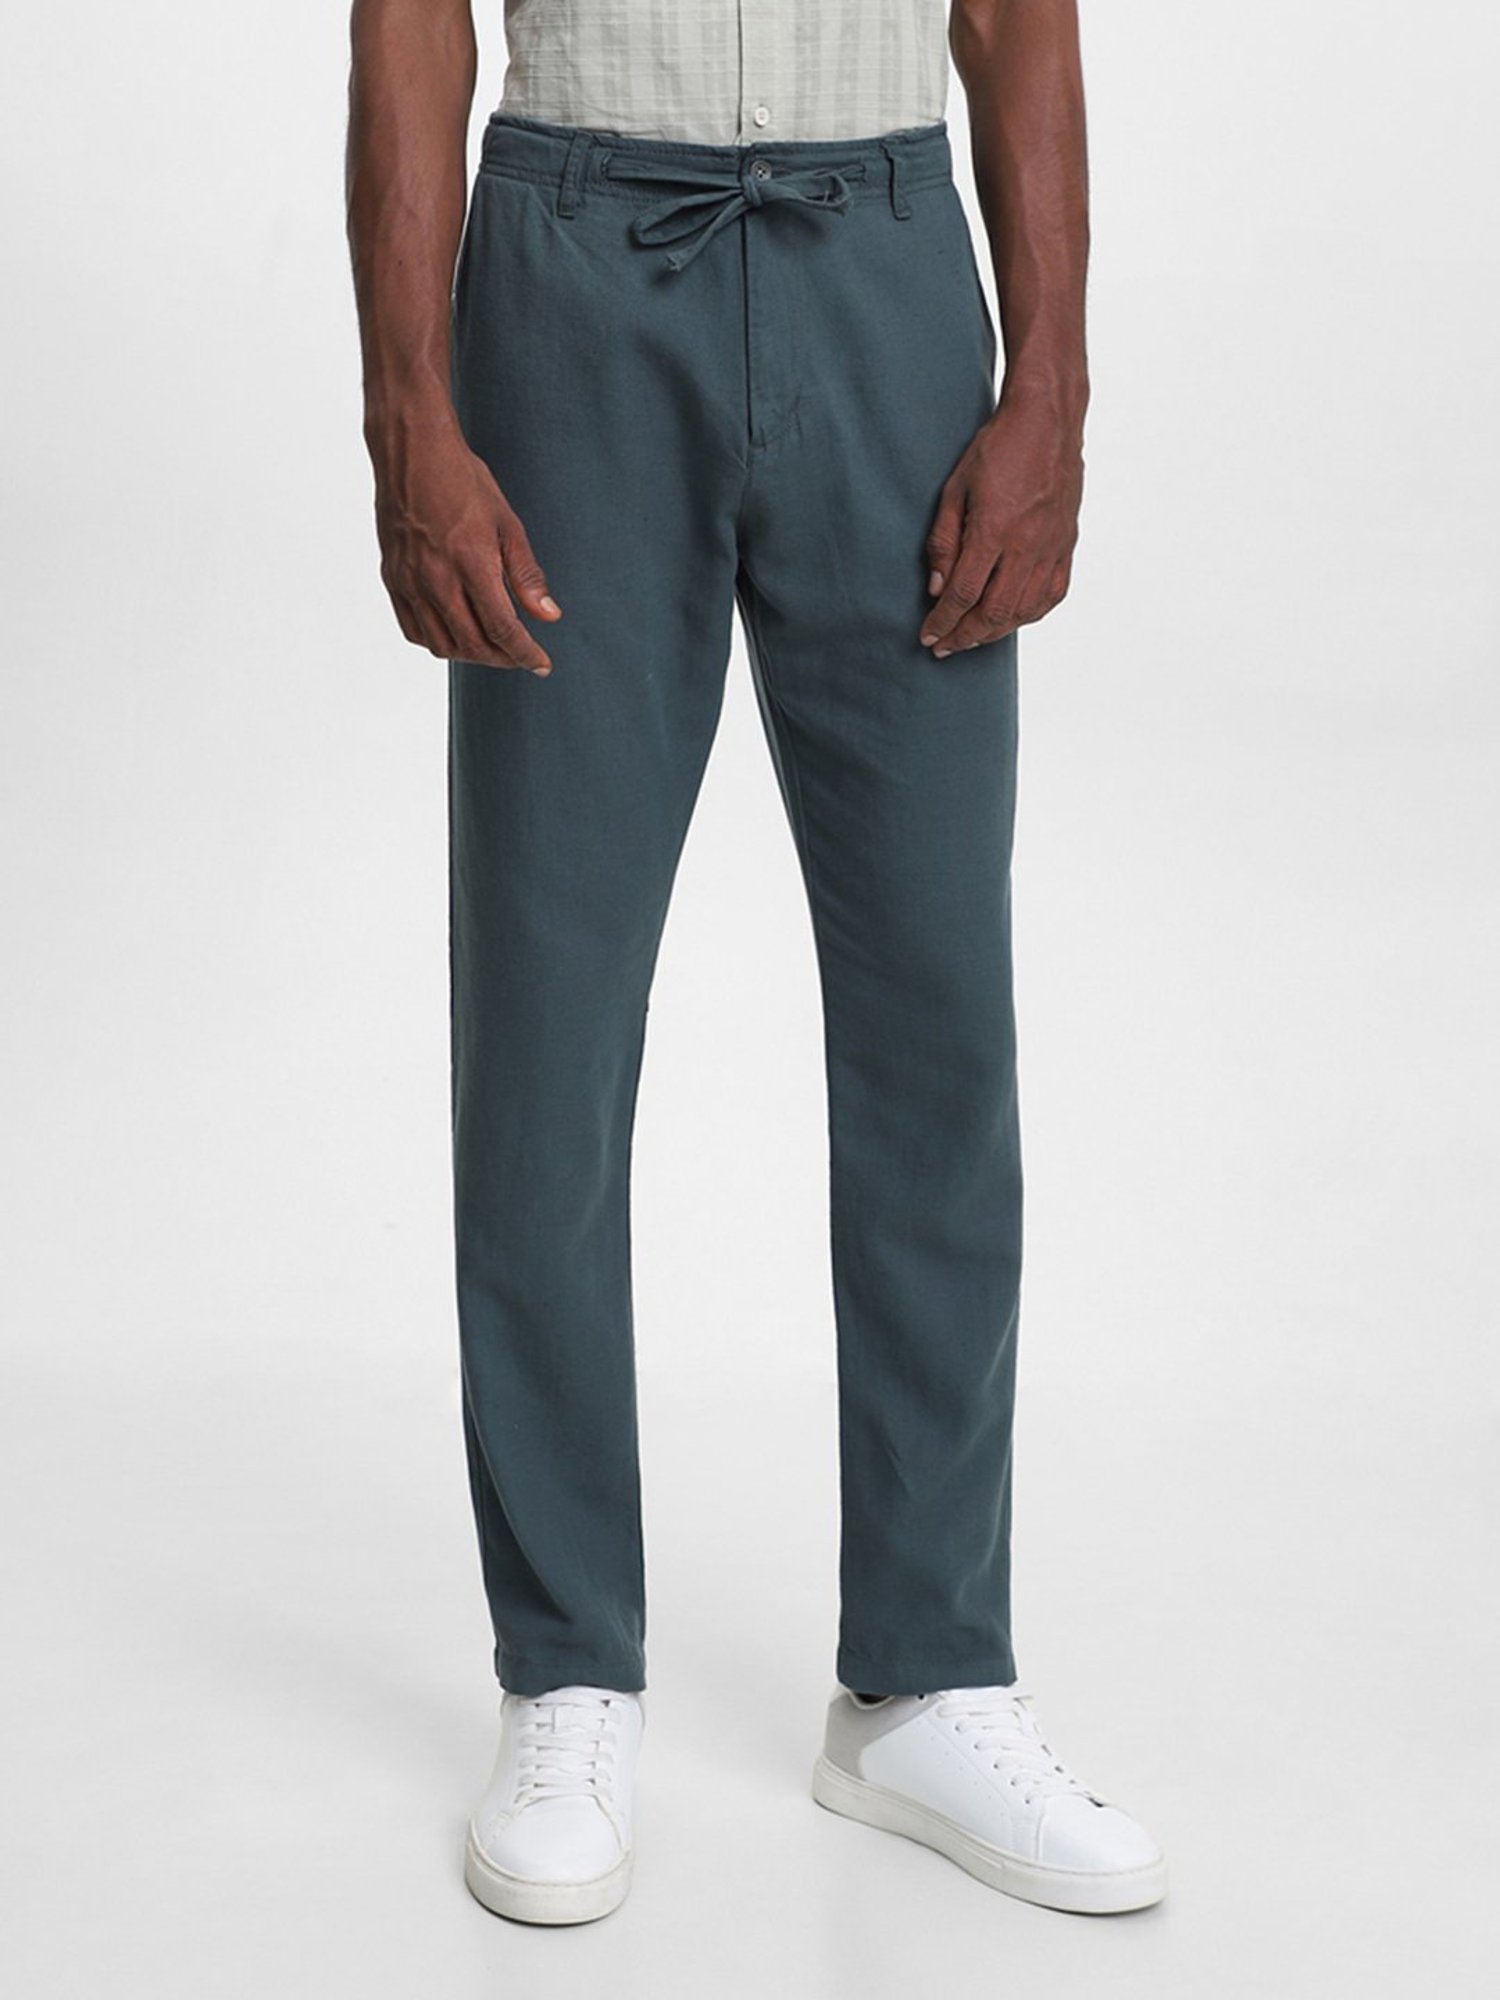 3-Pack Men's Super Stretch Slim Fit Everyday Chino Pants (Sizes, 30-42) -  Walmart.com